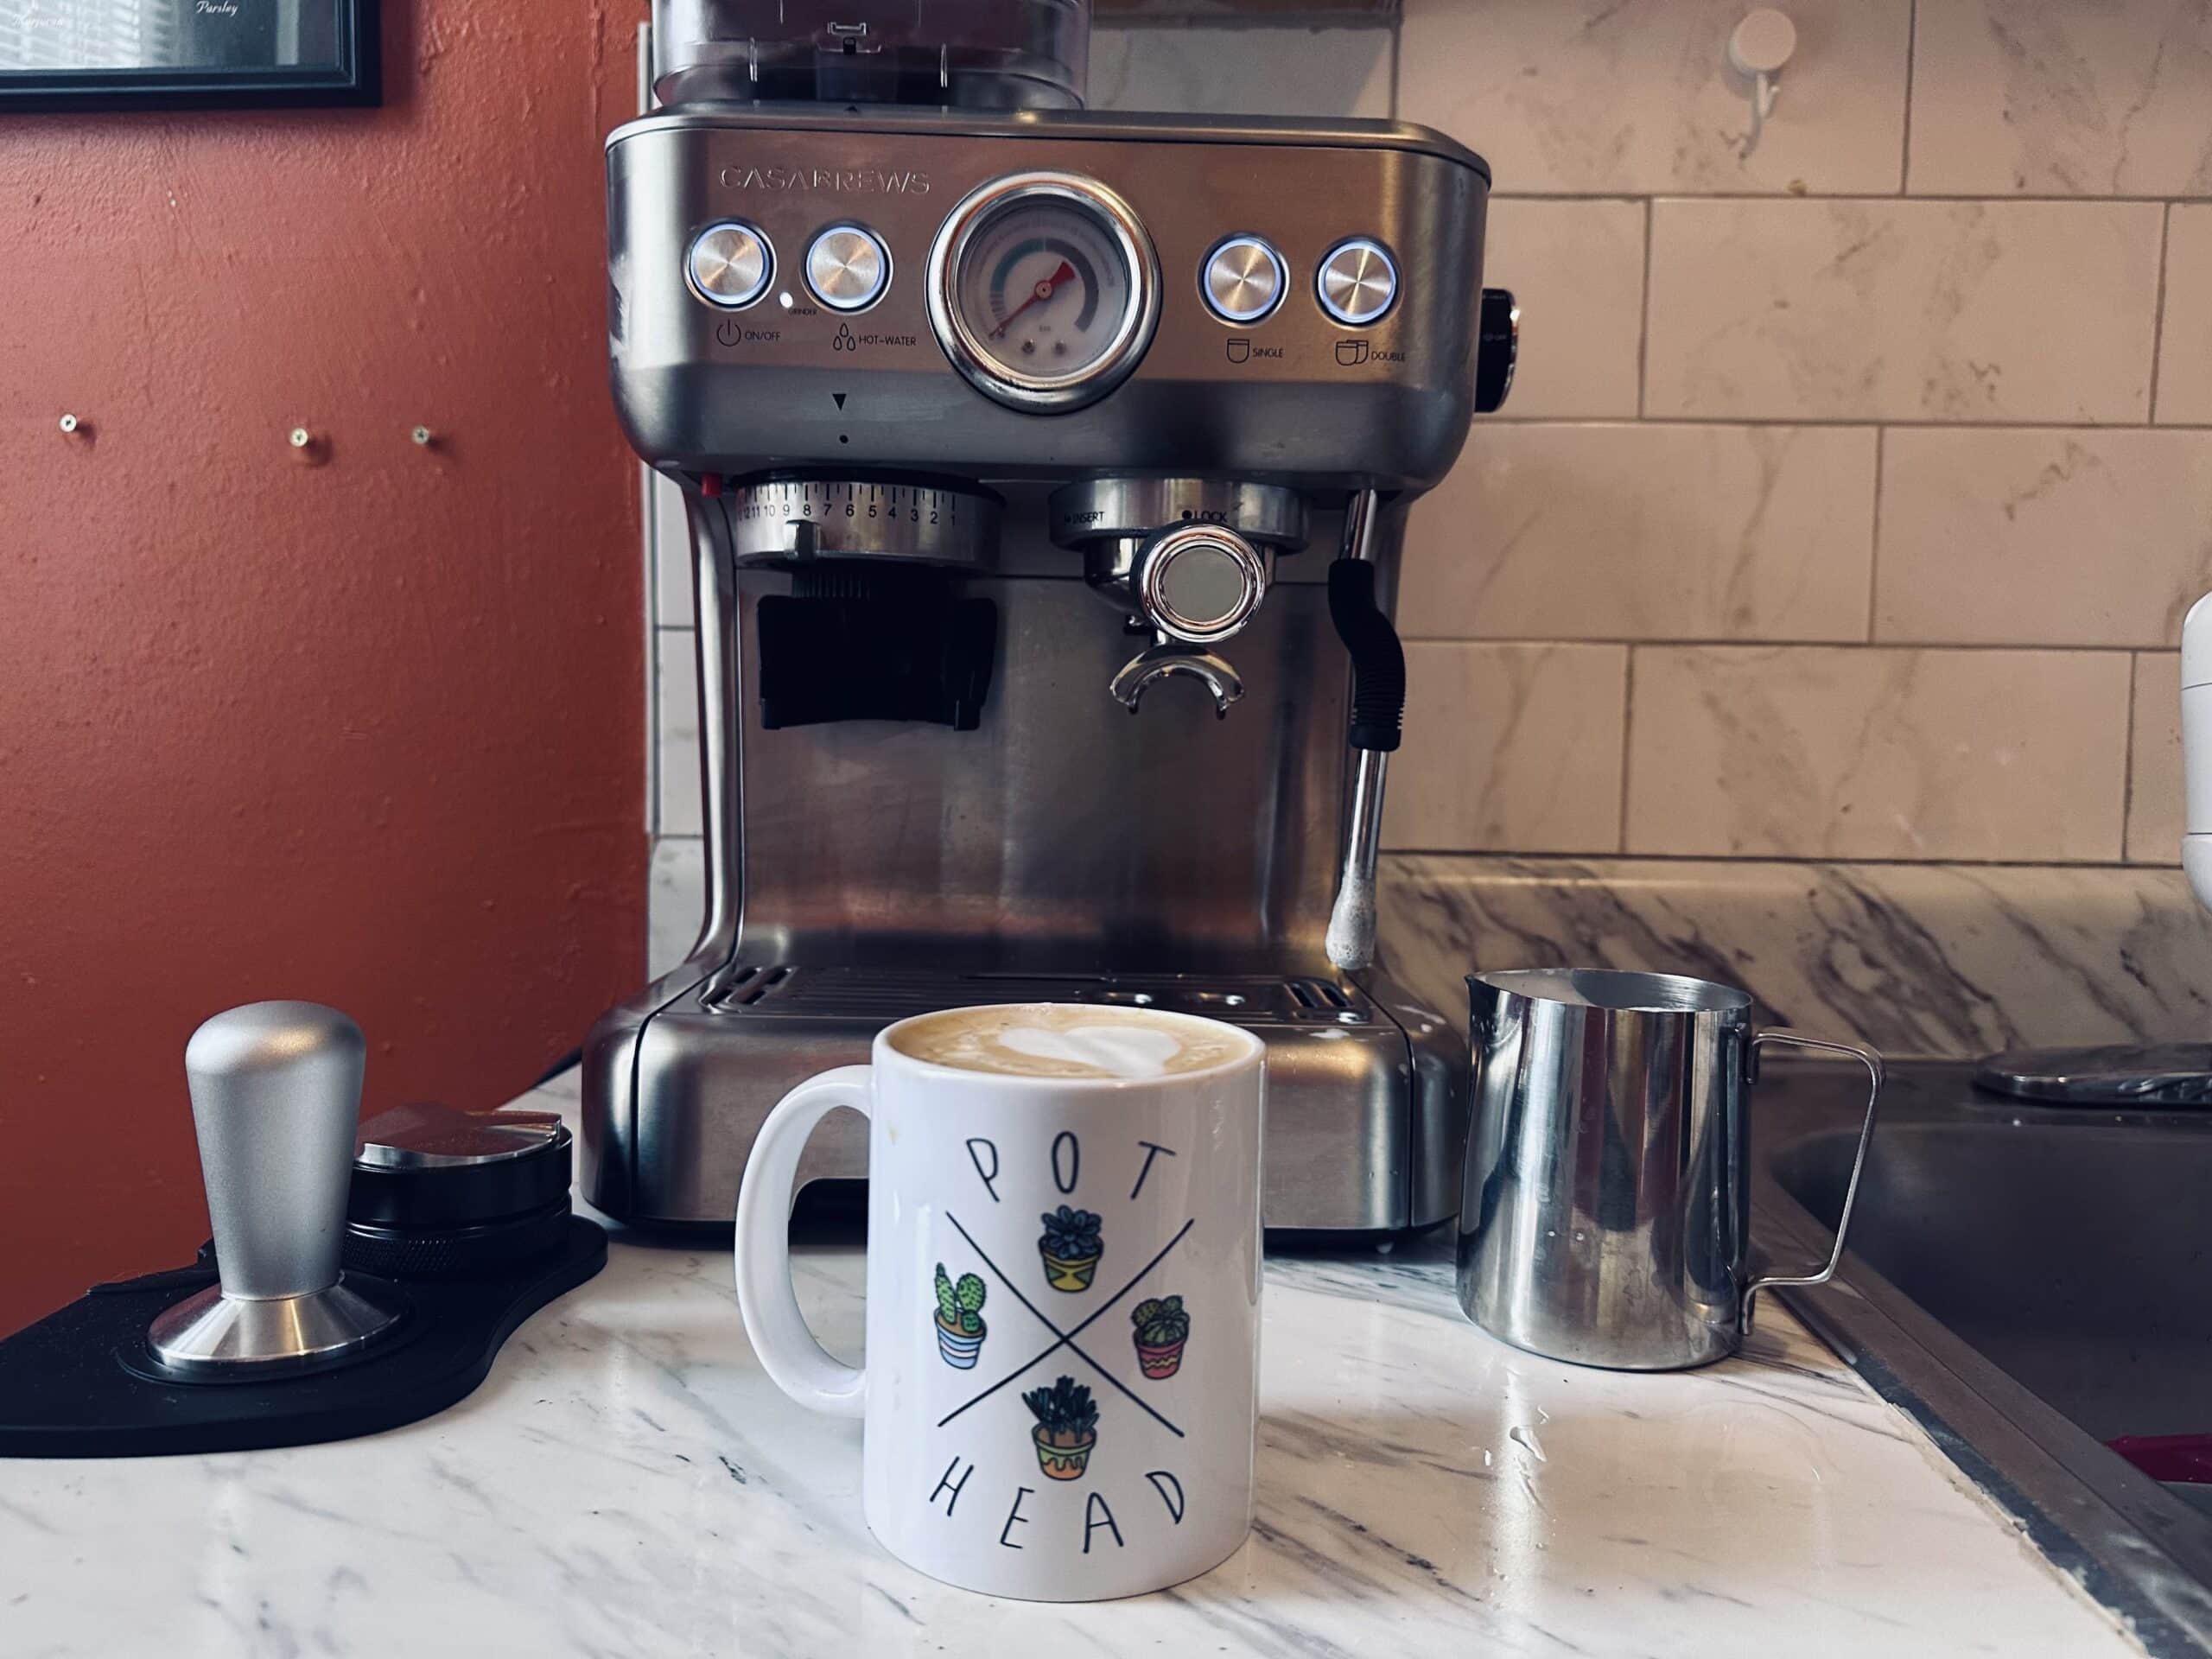 Casabrews Espresso Machine next to a brewed cup of coffee